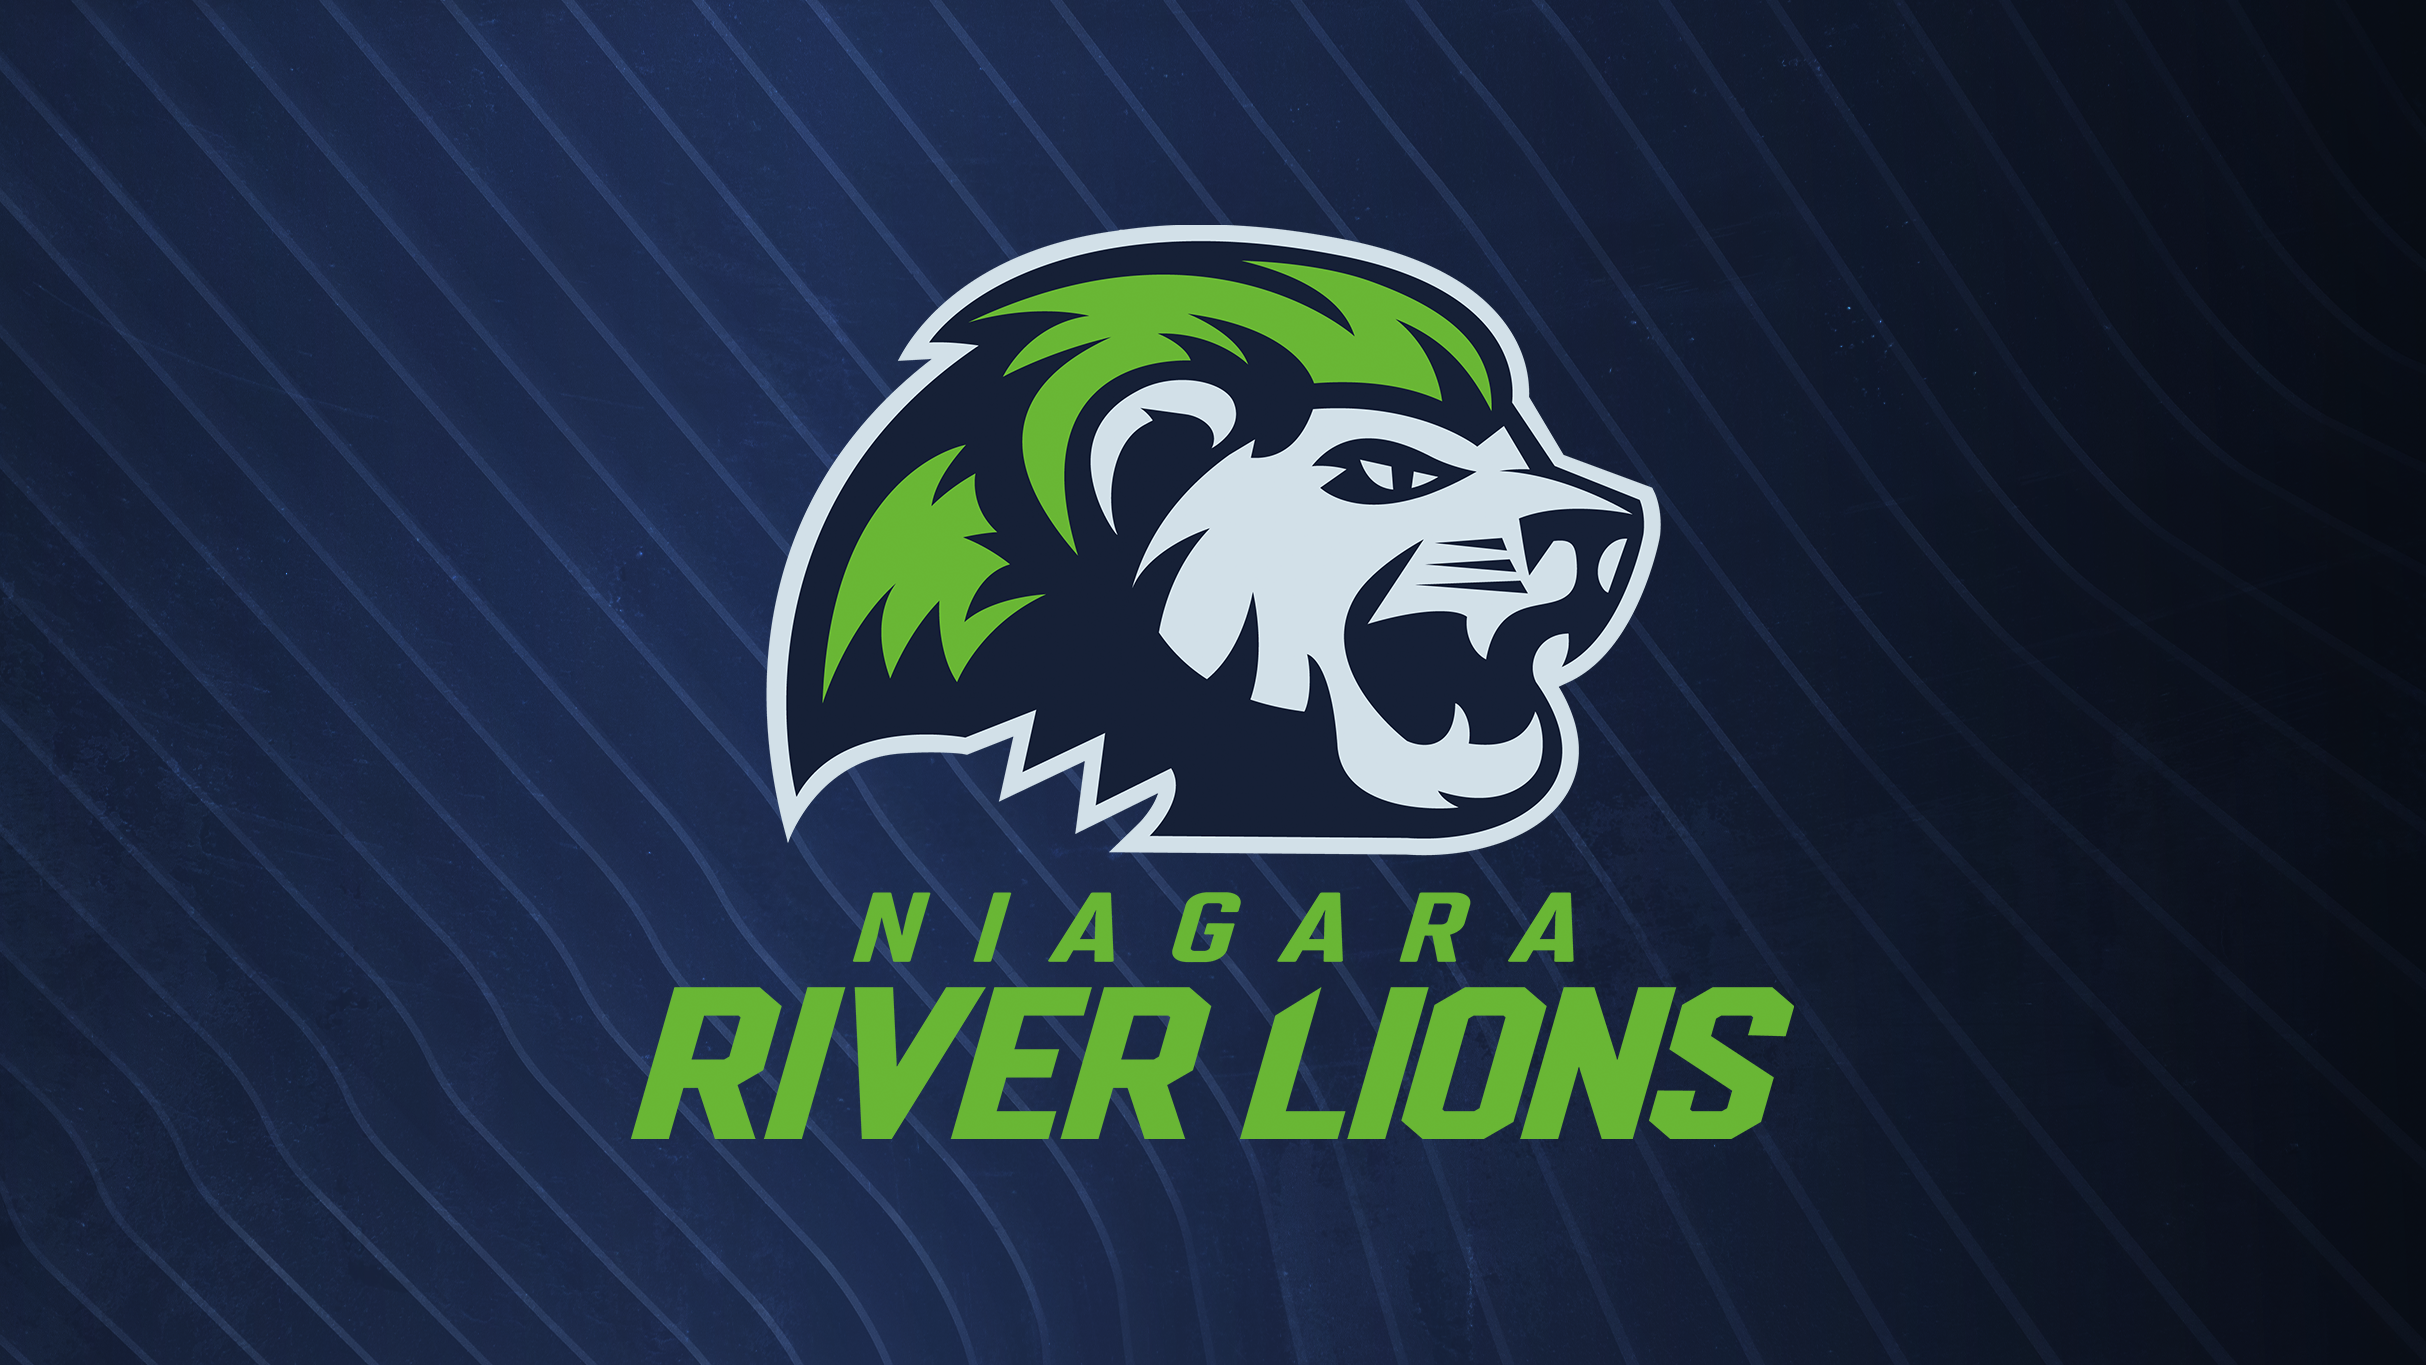 Niagara River Lions vs. Brampton Honey Badgers presales in St Catharines